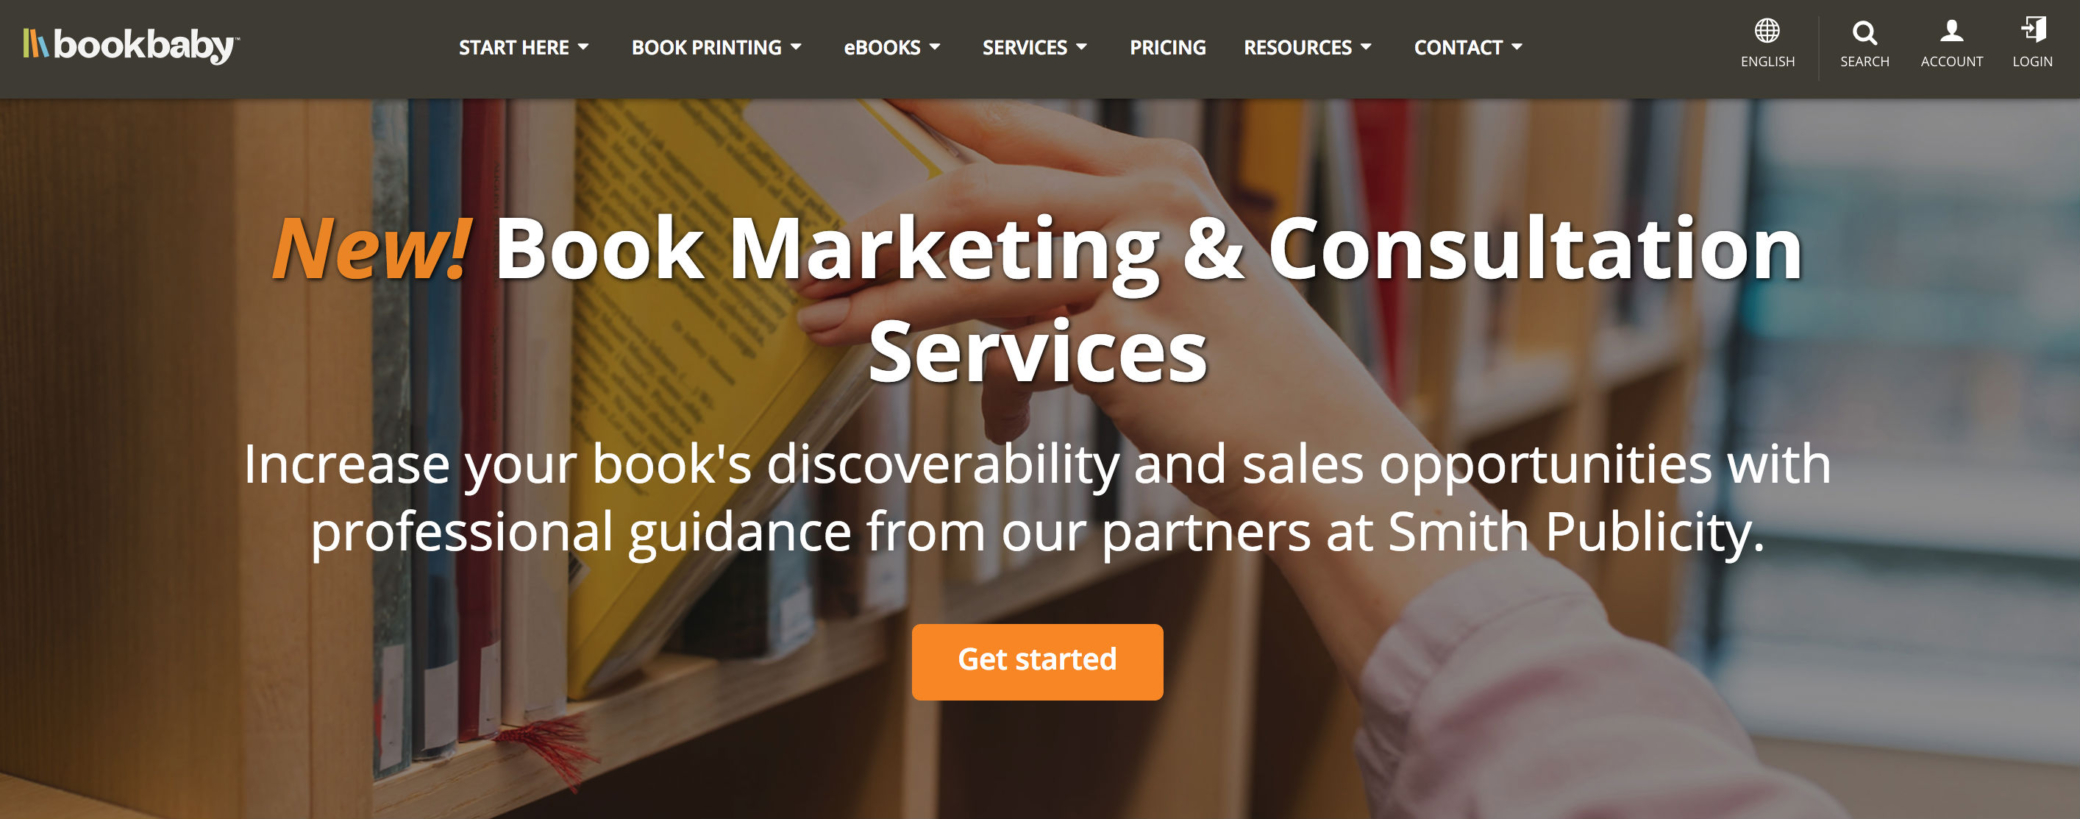 bookbaby book marketing services.